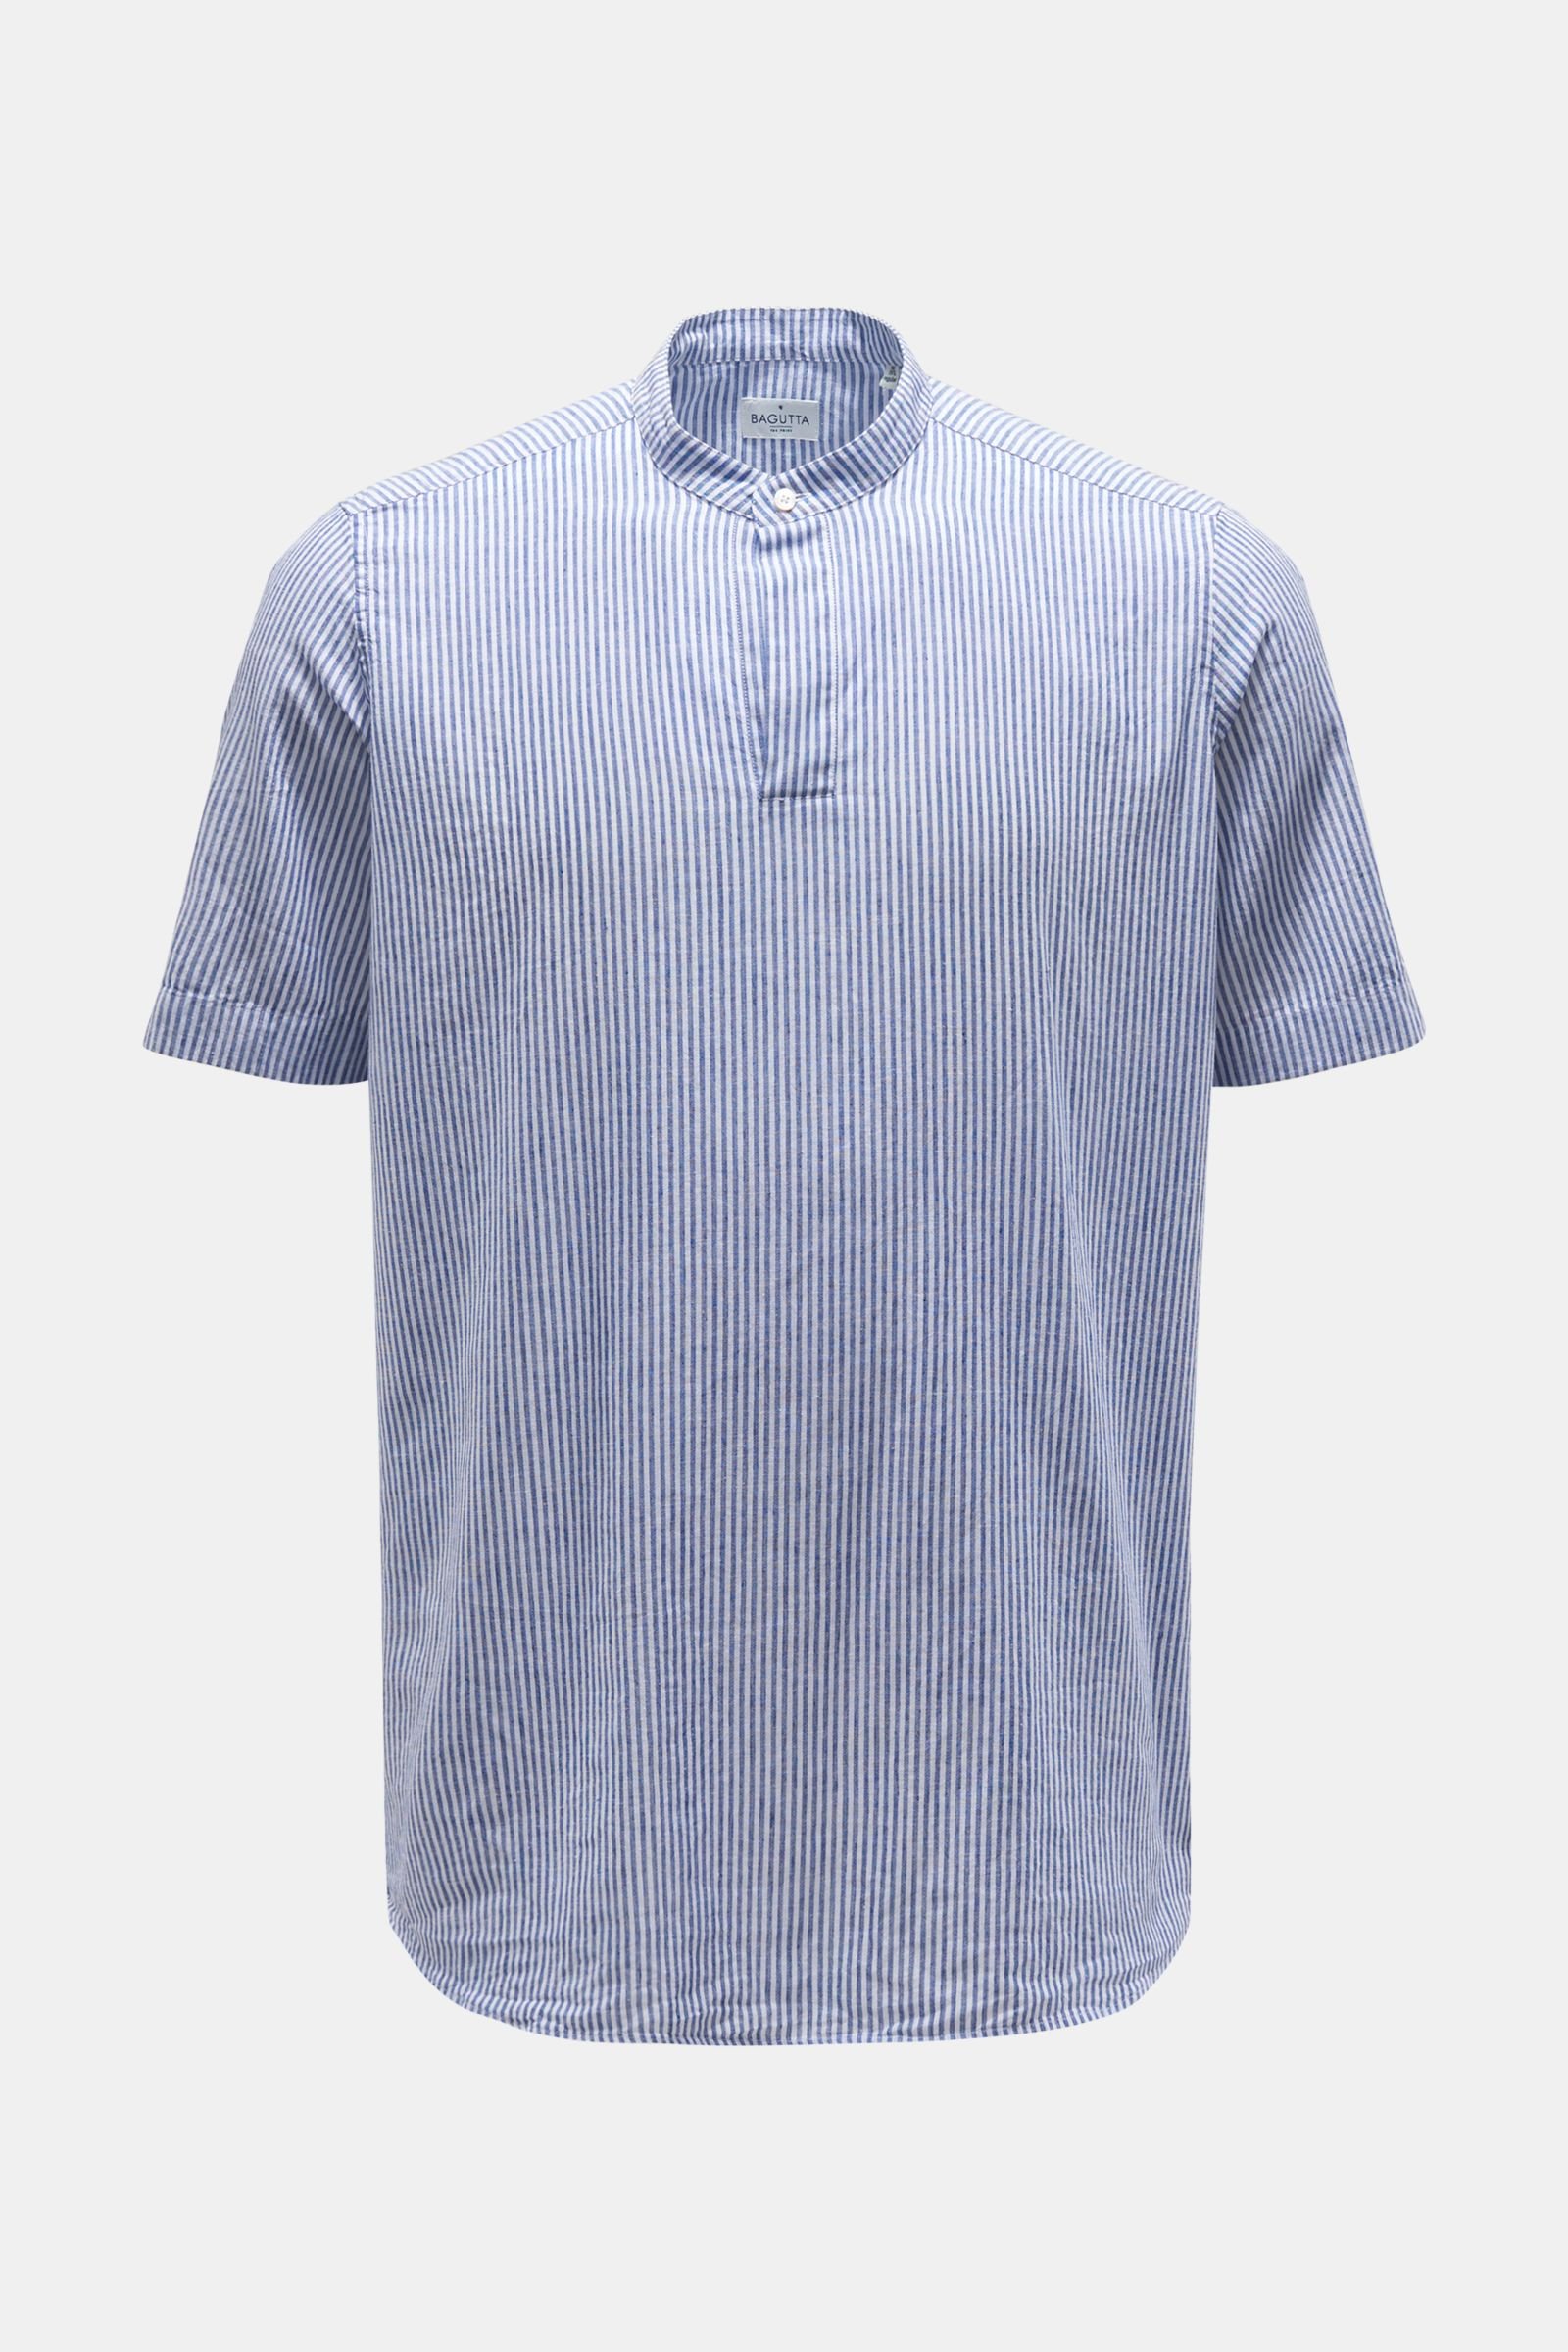 Popover short sleeve shirt 'Seoul' grandad collar navy/white striped